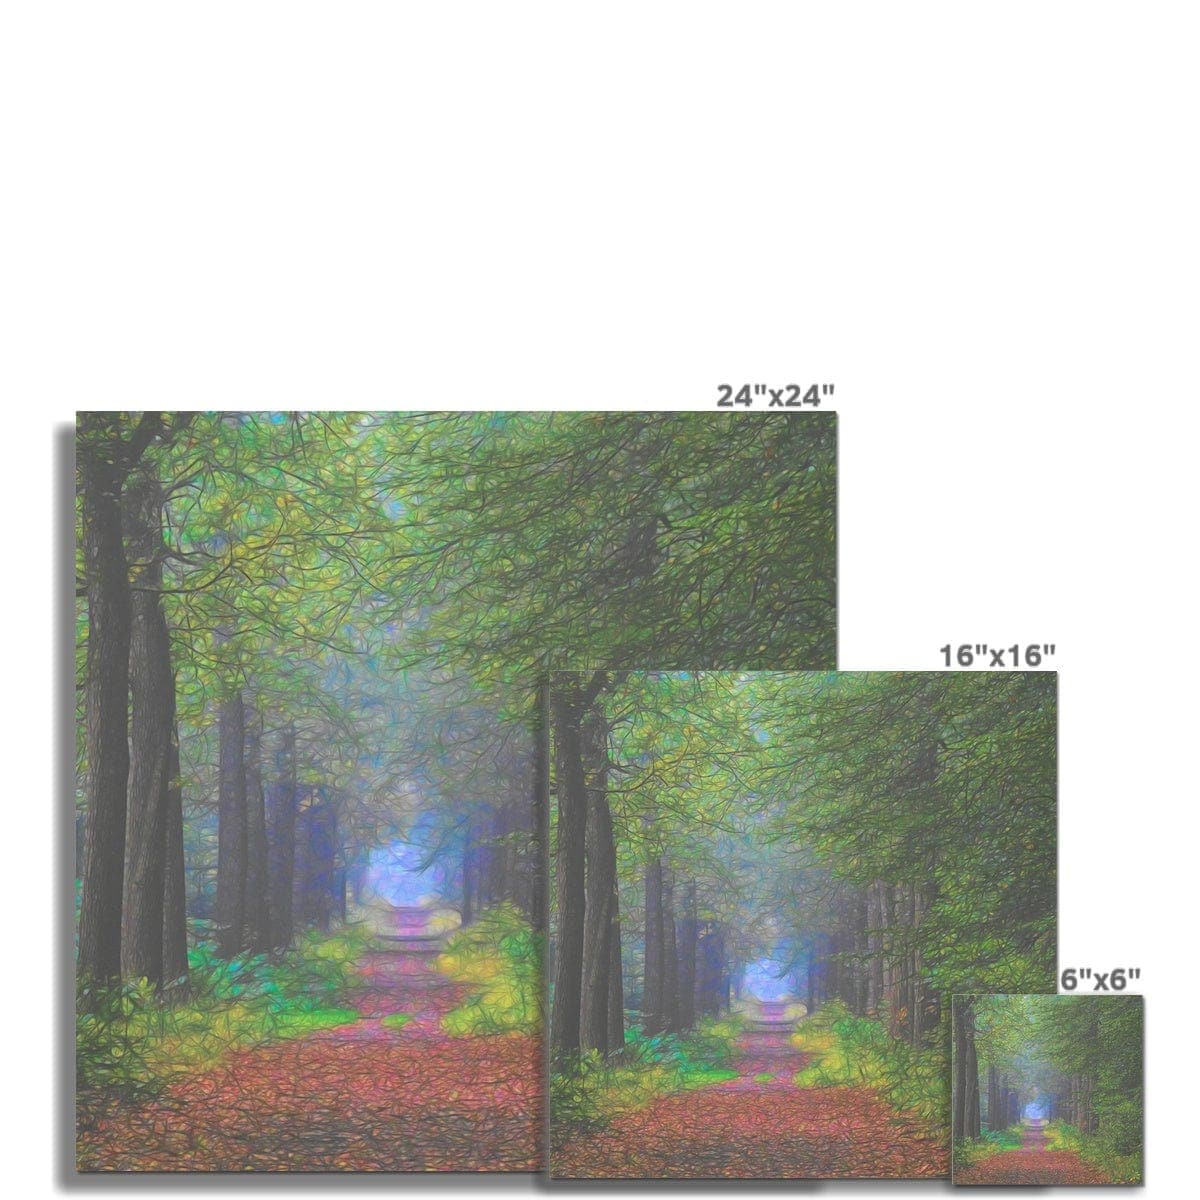 Forest lane, Hahnemühle German Etching Print, by Ingrid Hütten